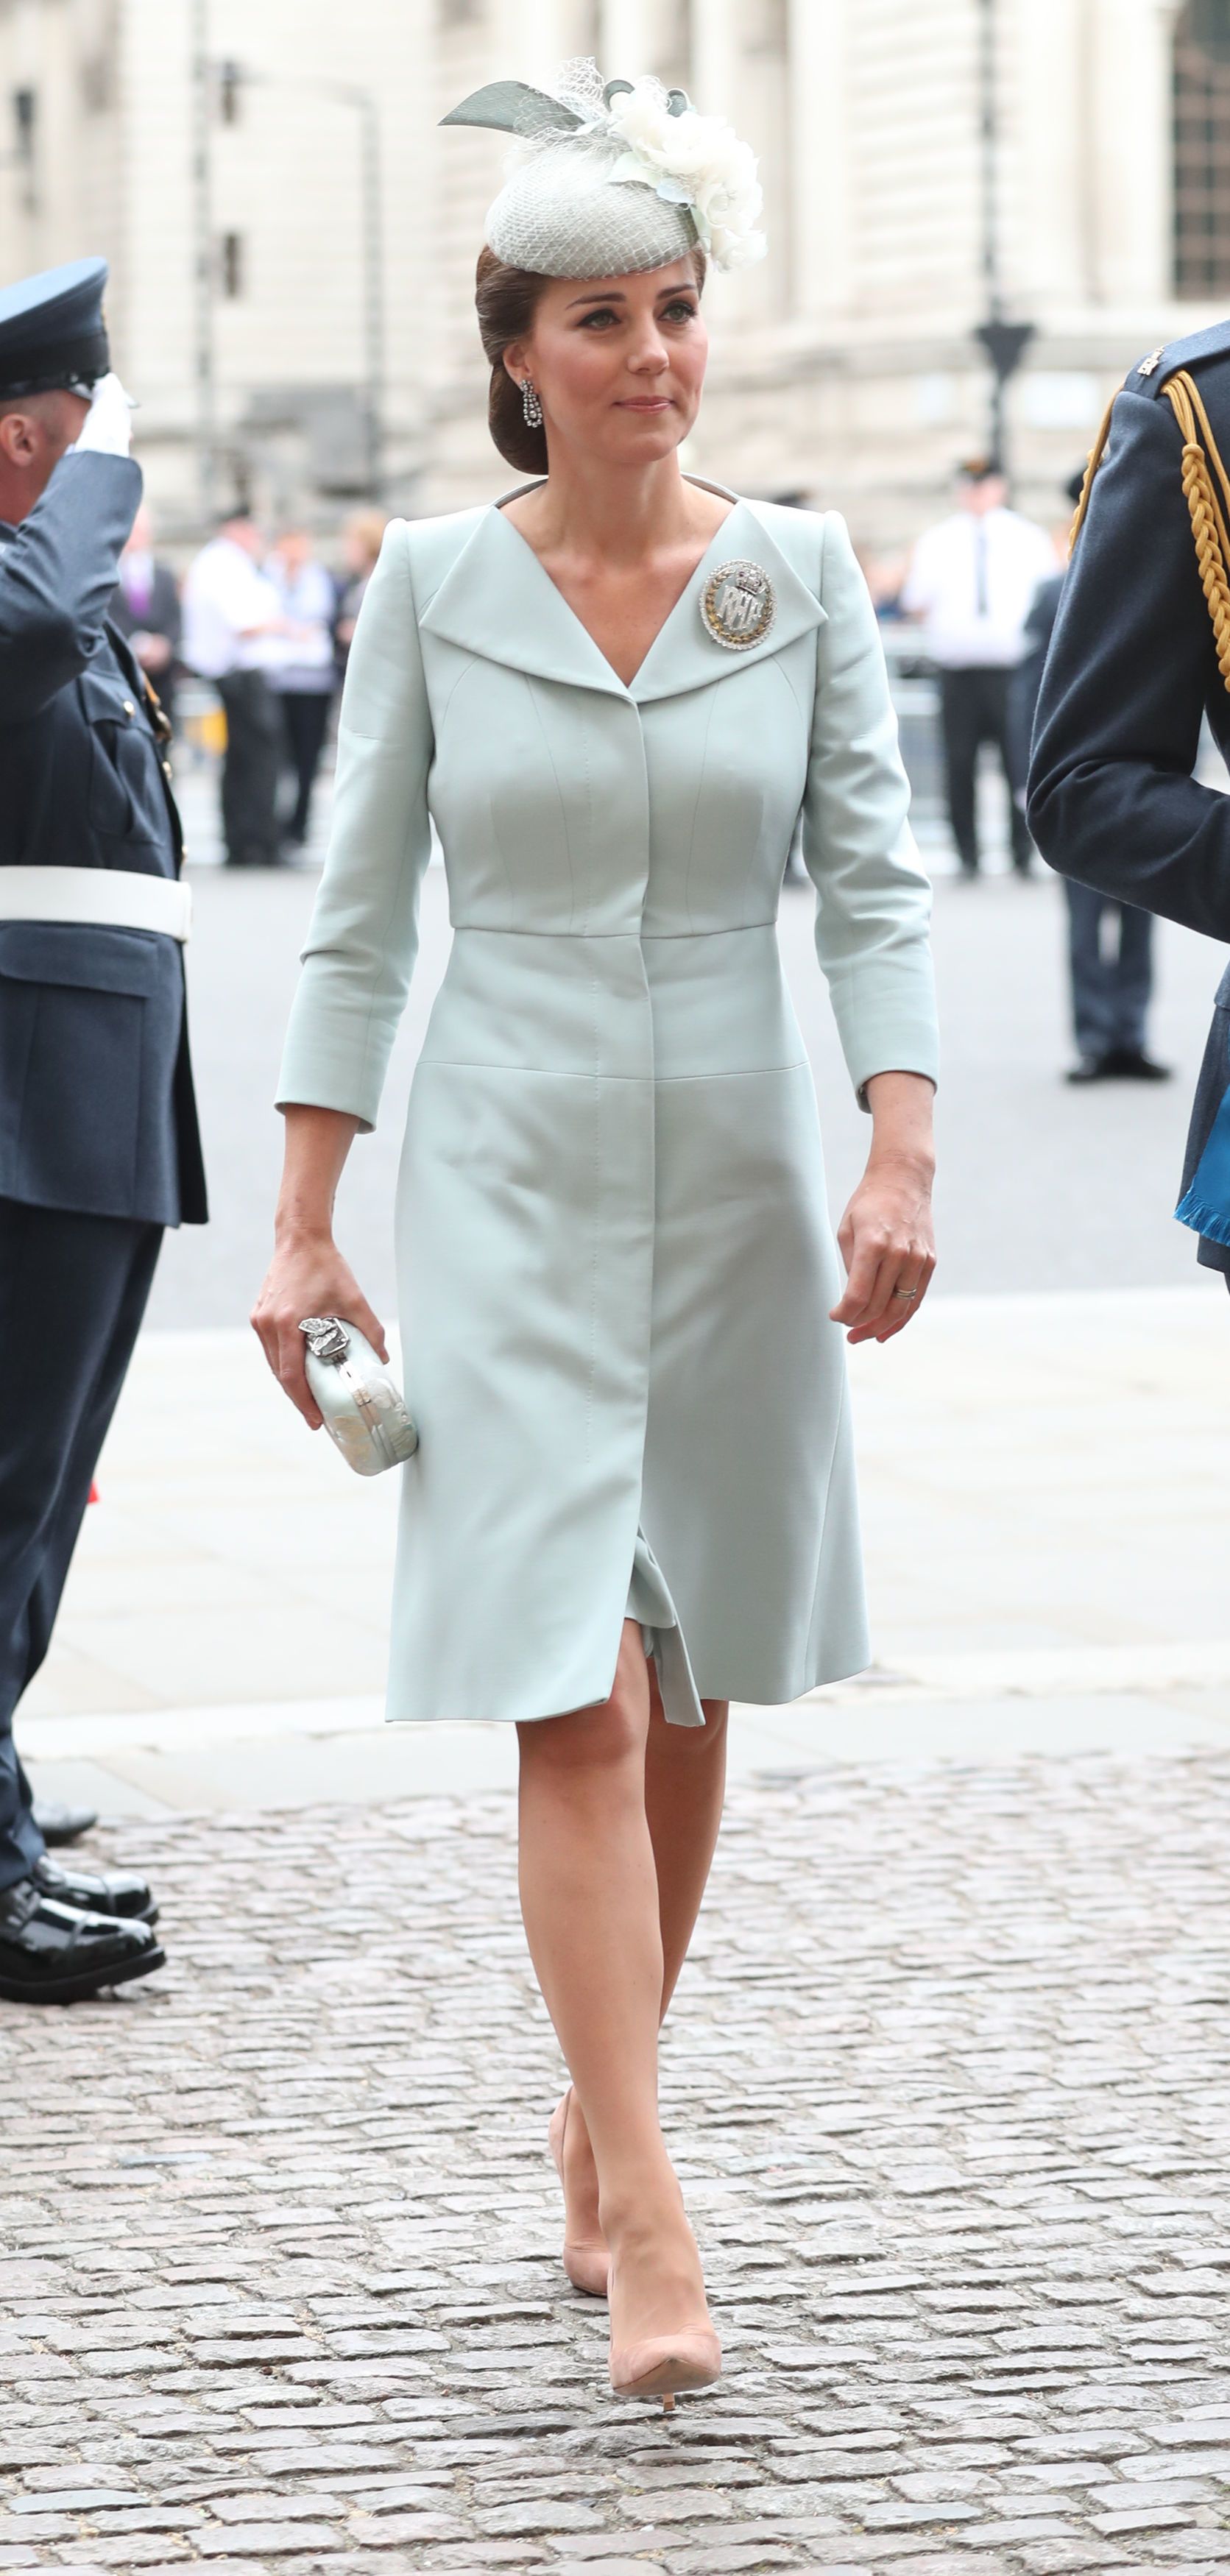 Kate Middleton Wears Alexander McQueen Coat Dress to RAF Centenary Service  - Duchess of Cambridge Takes Break From Maternity Leave